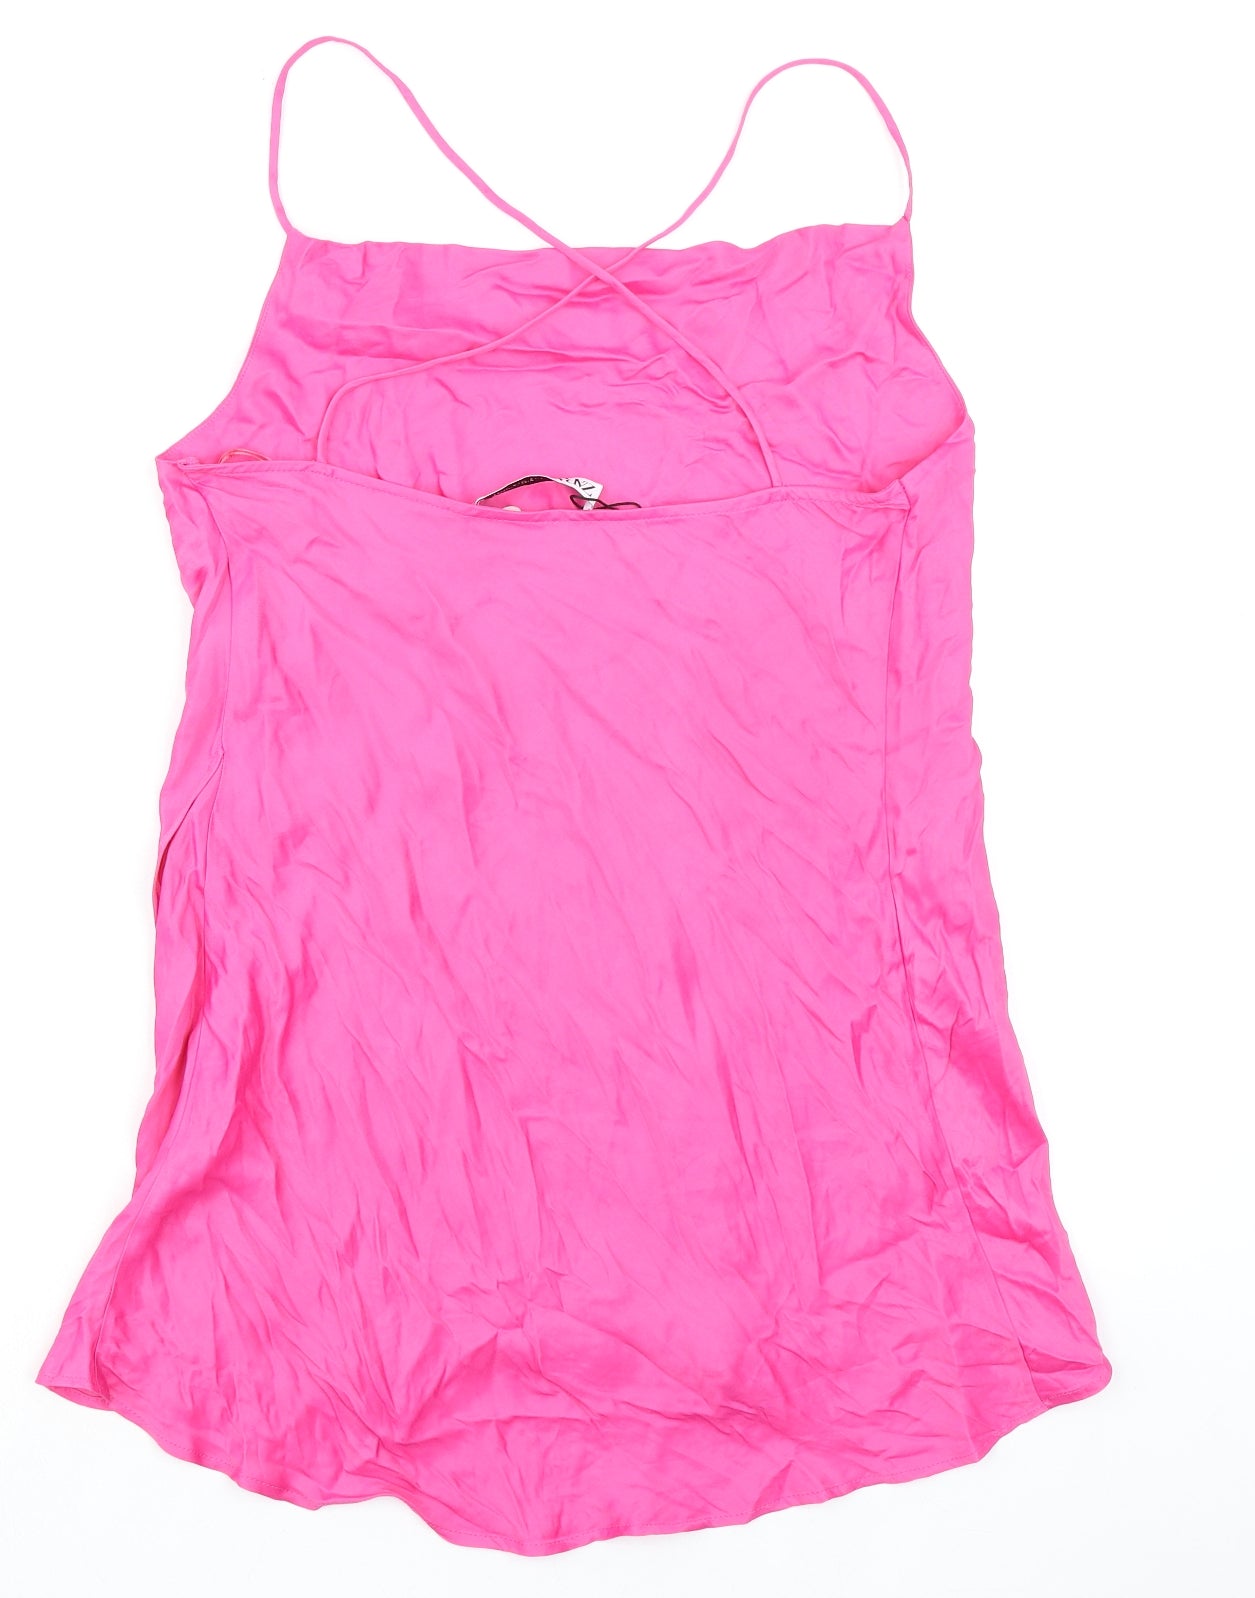 Zara Womens Pink Viscose Slip Dress Size S Square Neck Pullover